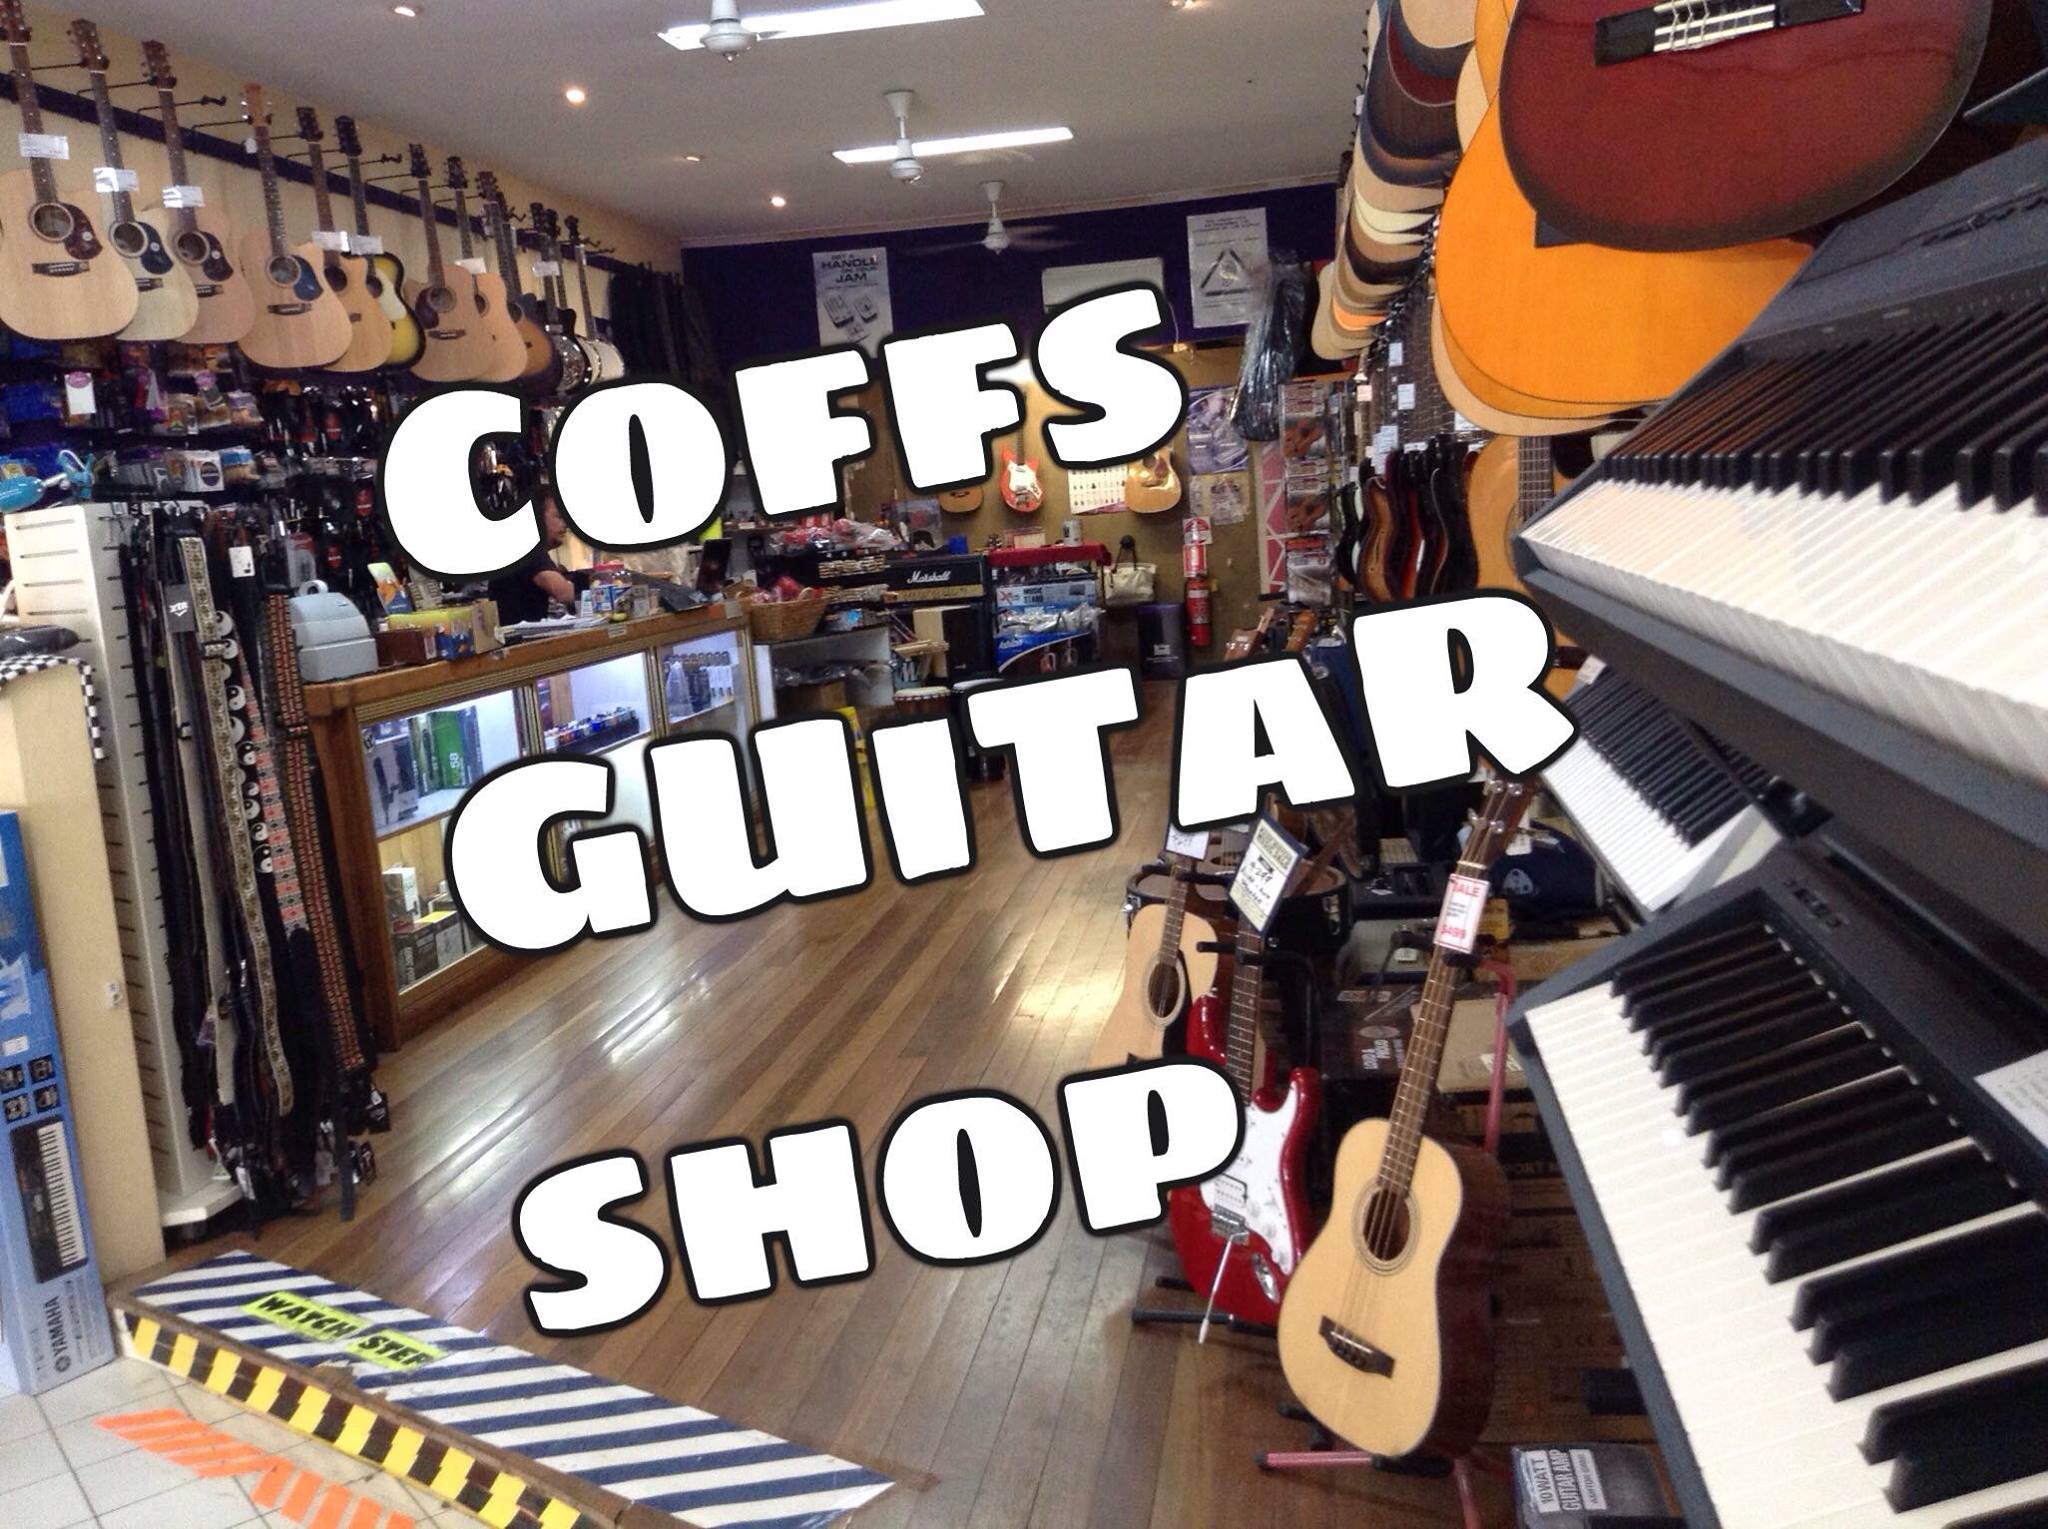 Coffs Guitar Shop